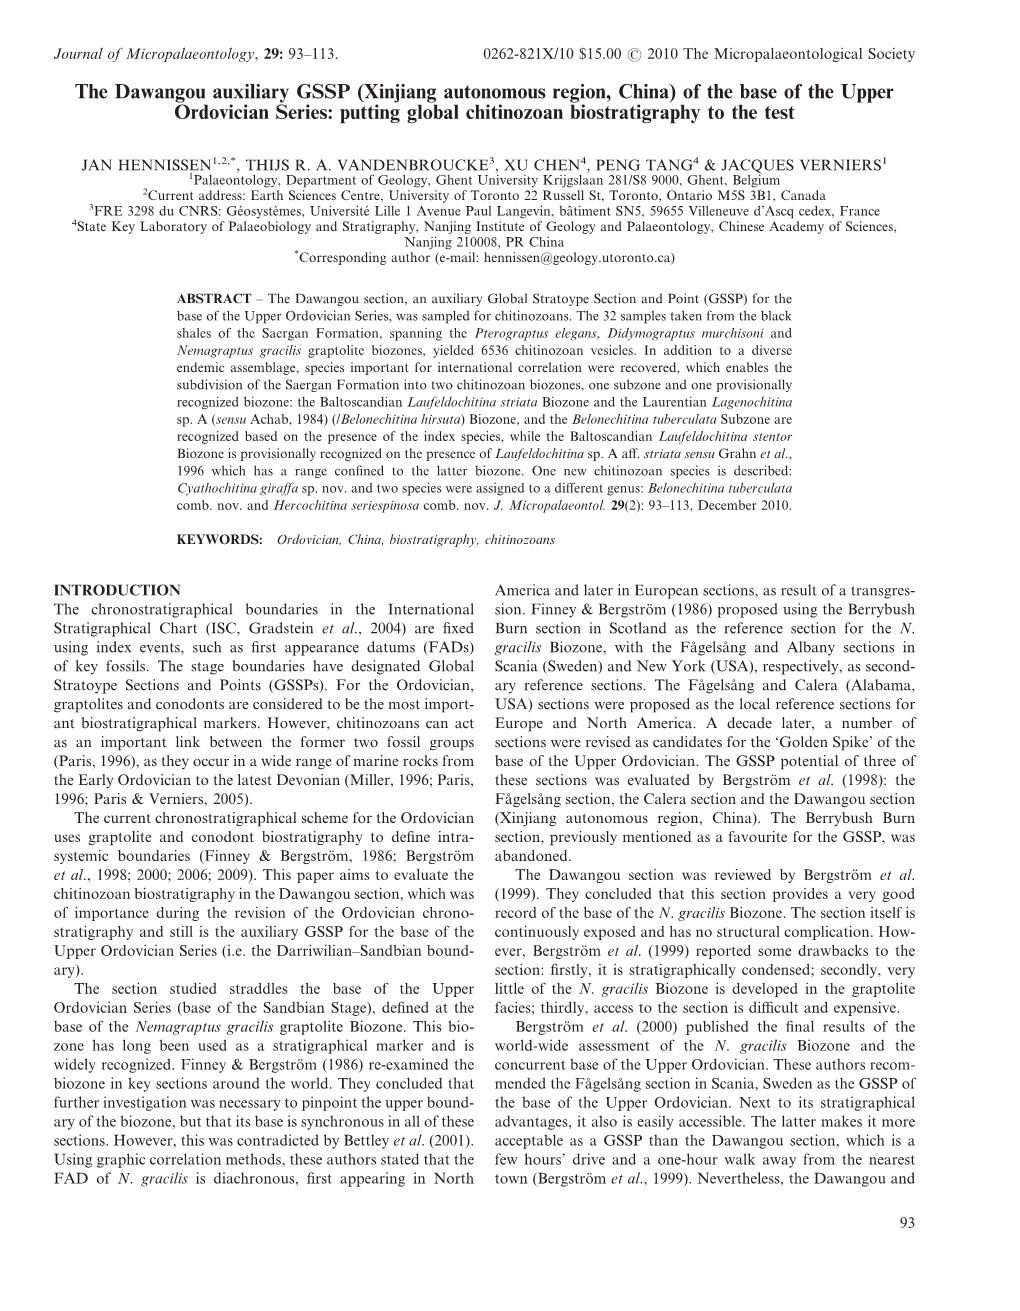 Article (PDF, 1502